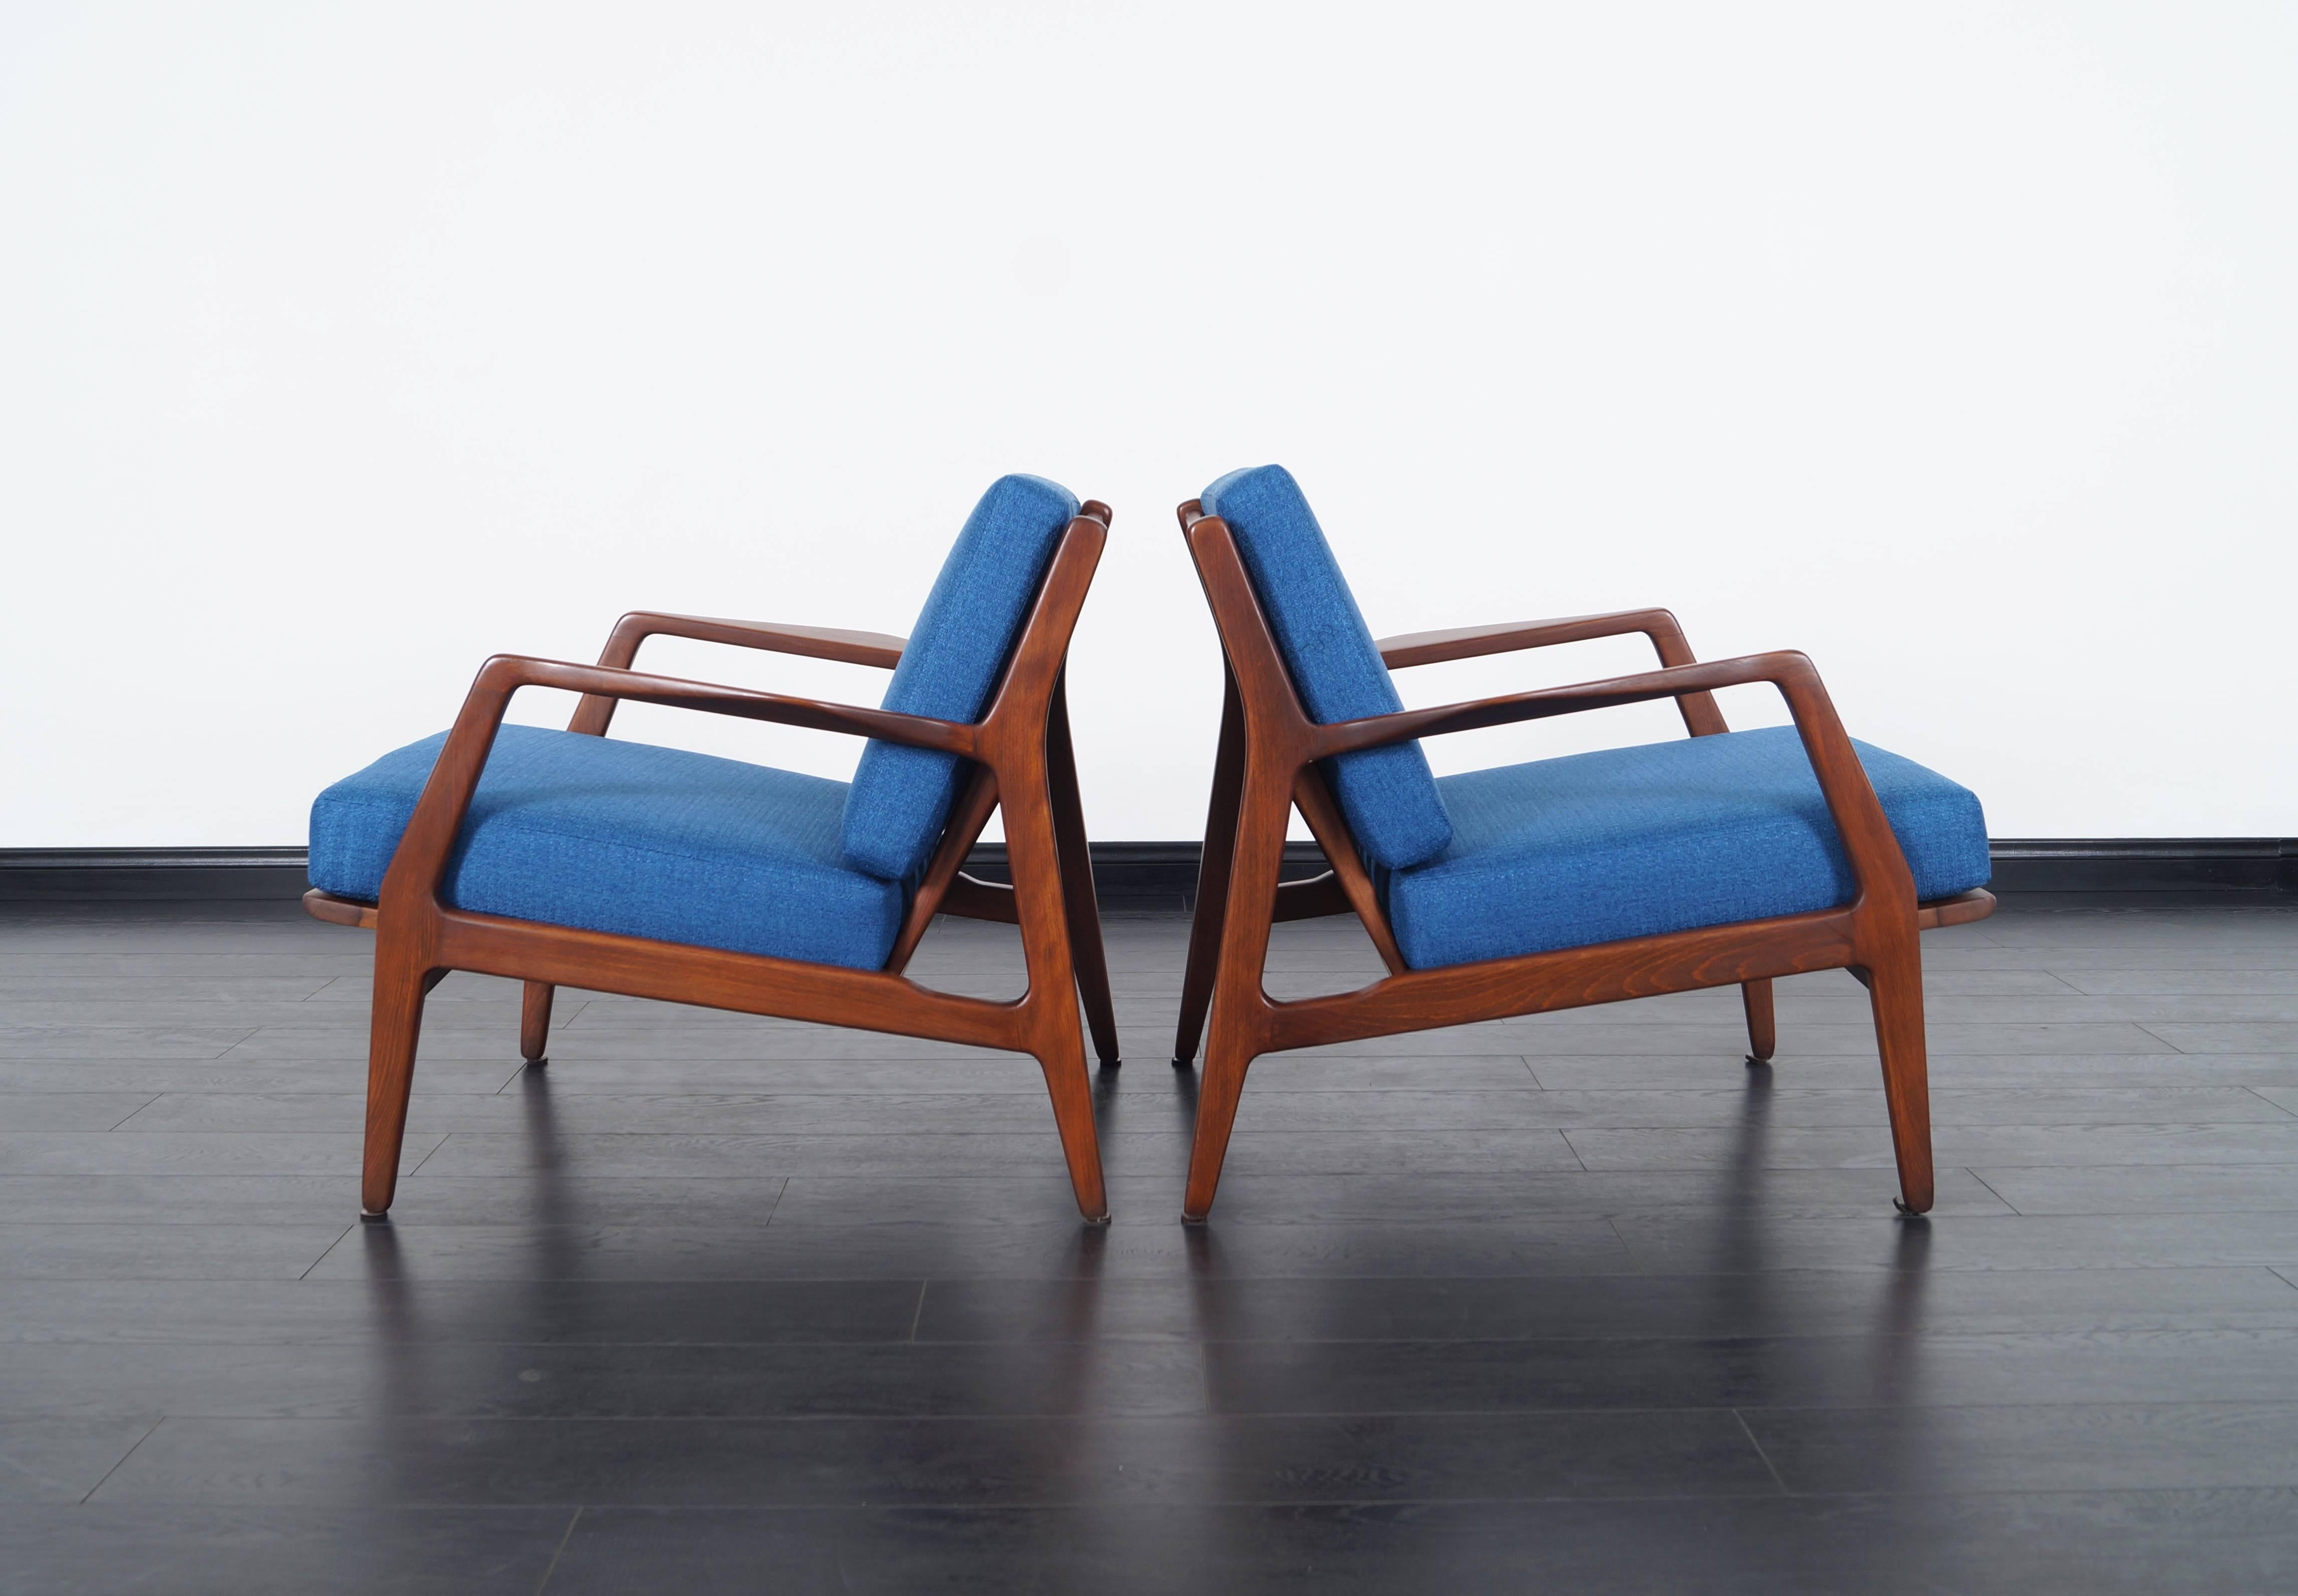 Pair of fabulous Mid-Century Modern lounge chairs designed by Ib Kofod-Larsen.